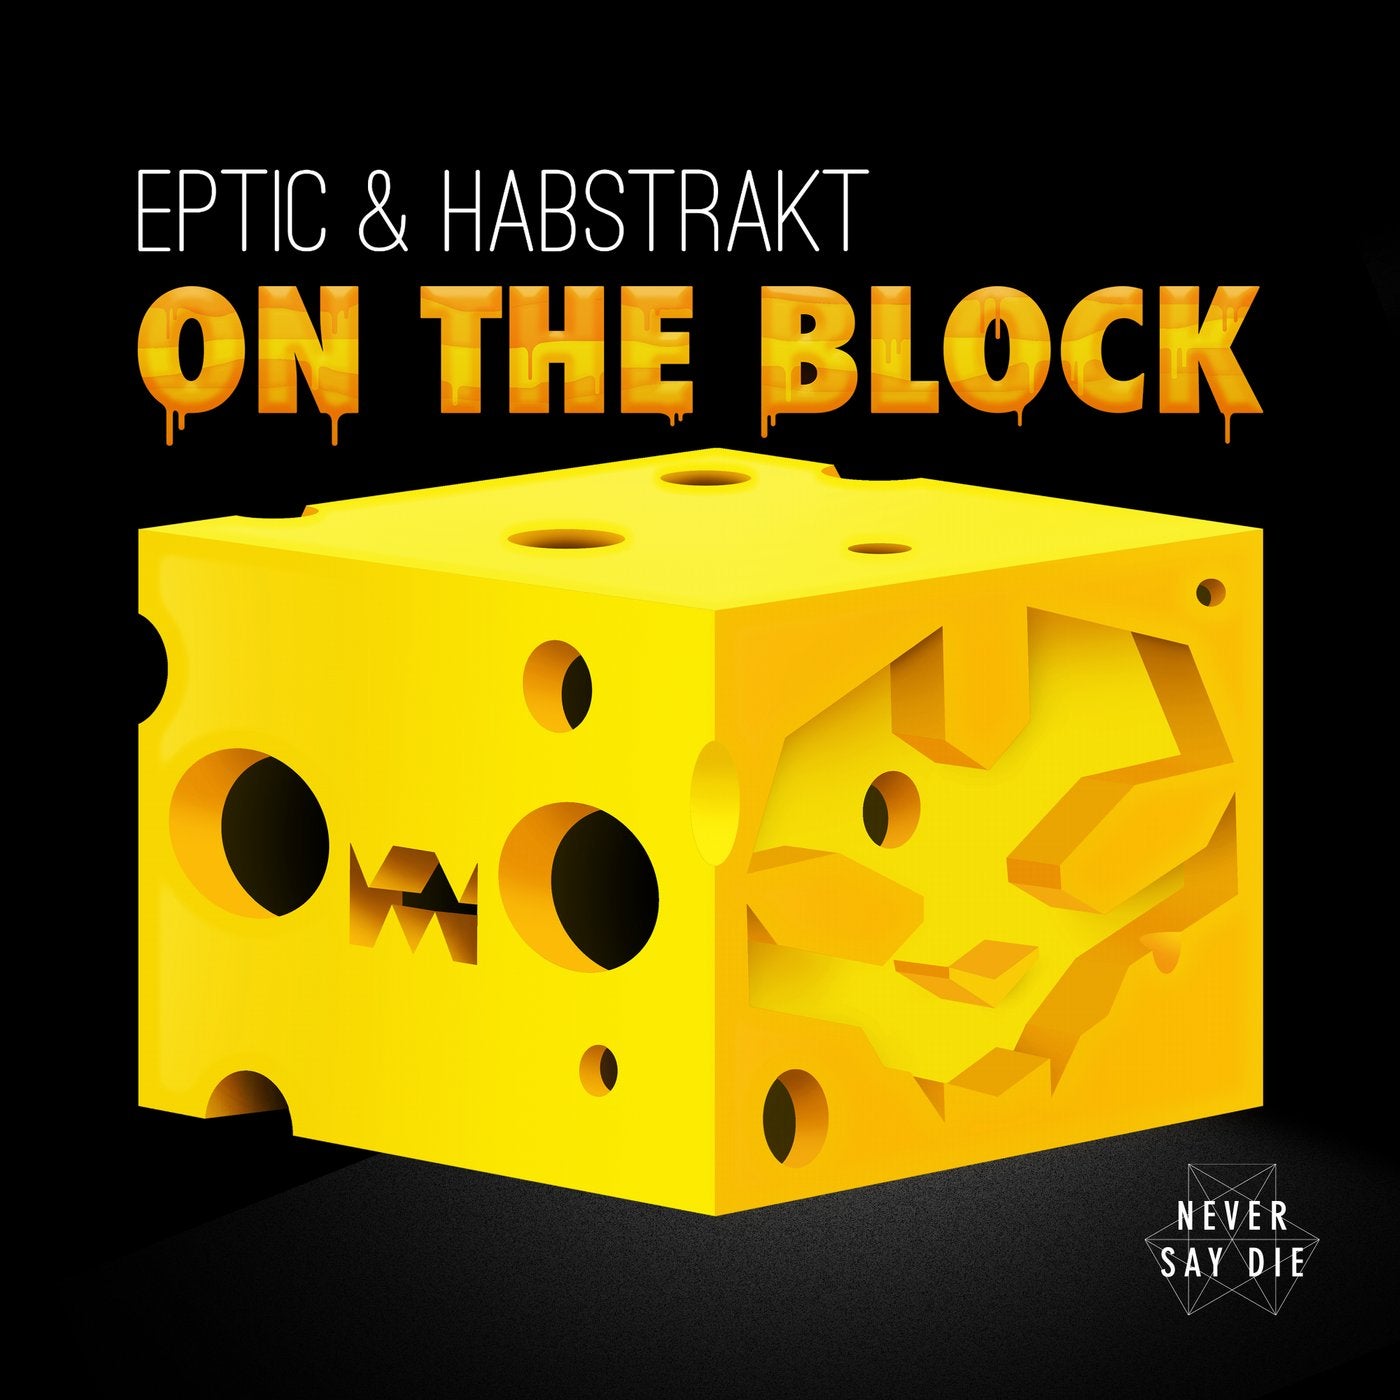 Never blocks. Habstrakt. Eptic. Eptic DJ. Habstrakt the Sound.